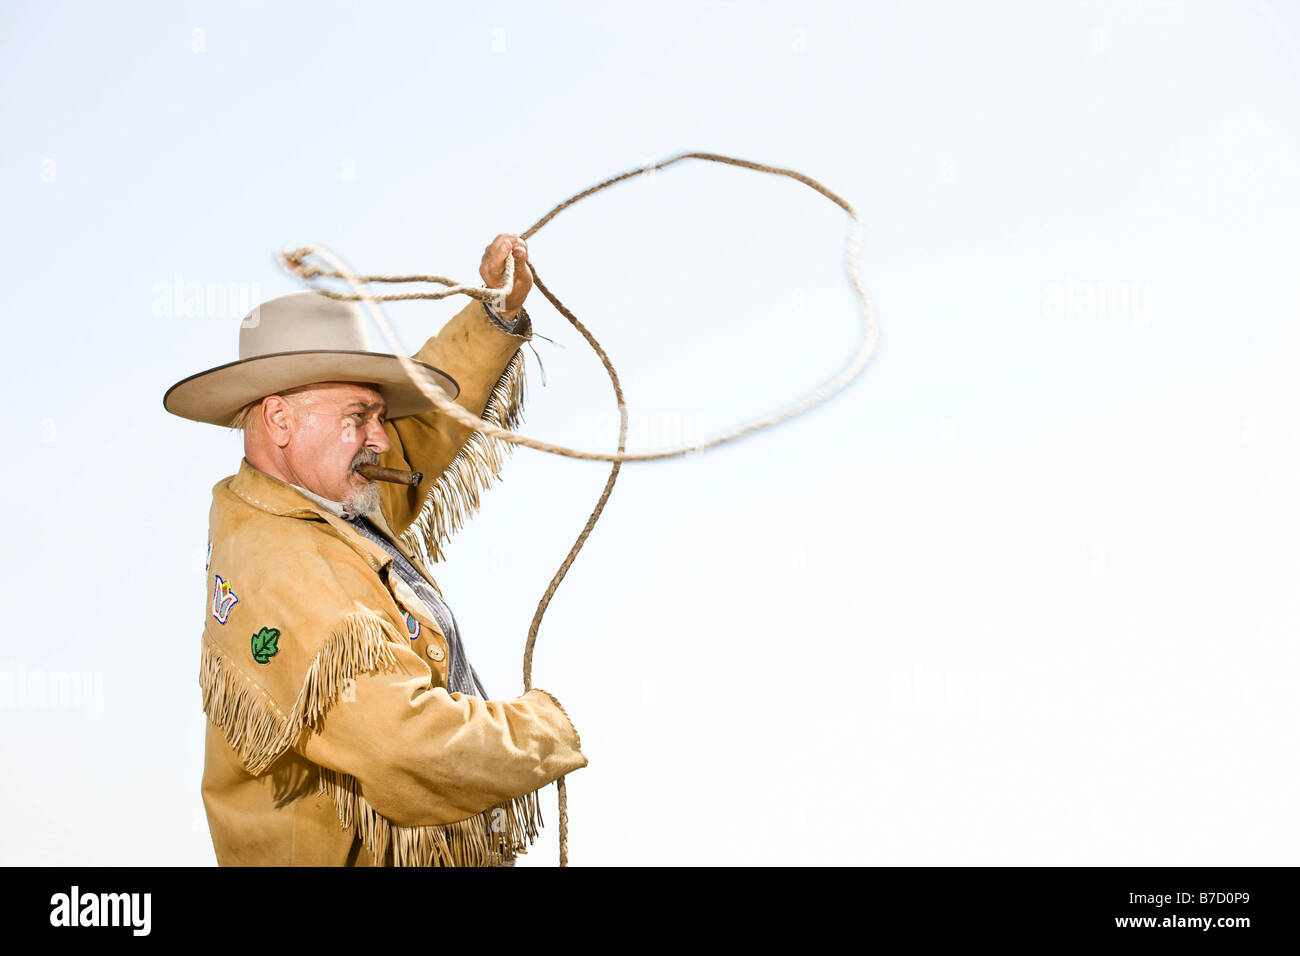 Ein Cowboy Lasso werfen Stockfotografie - Alamy